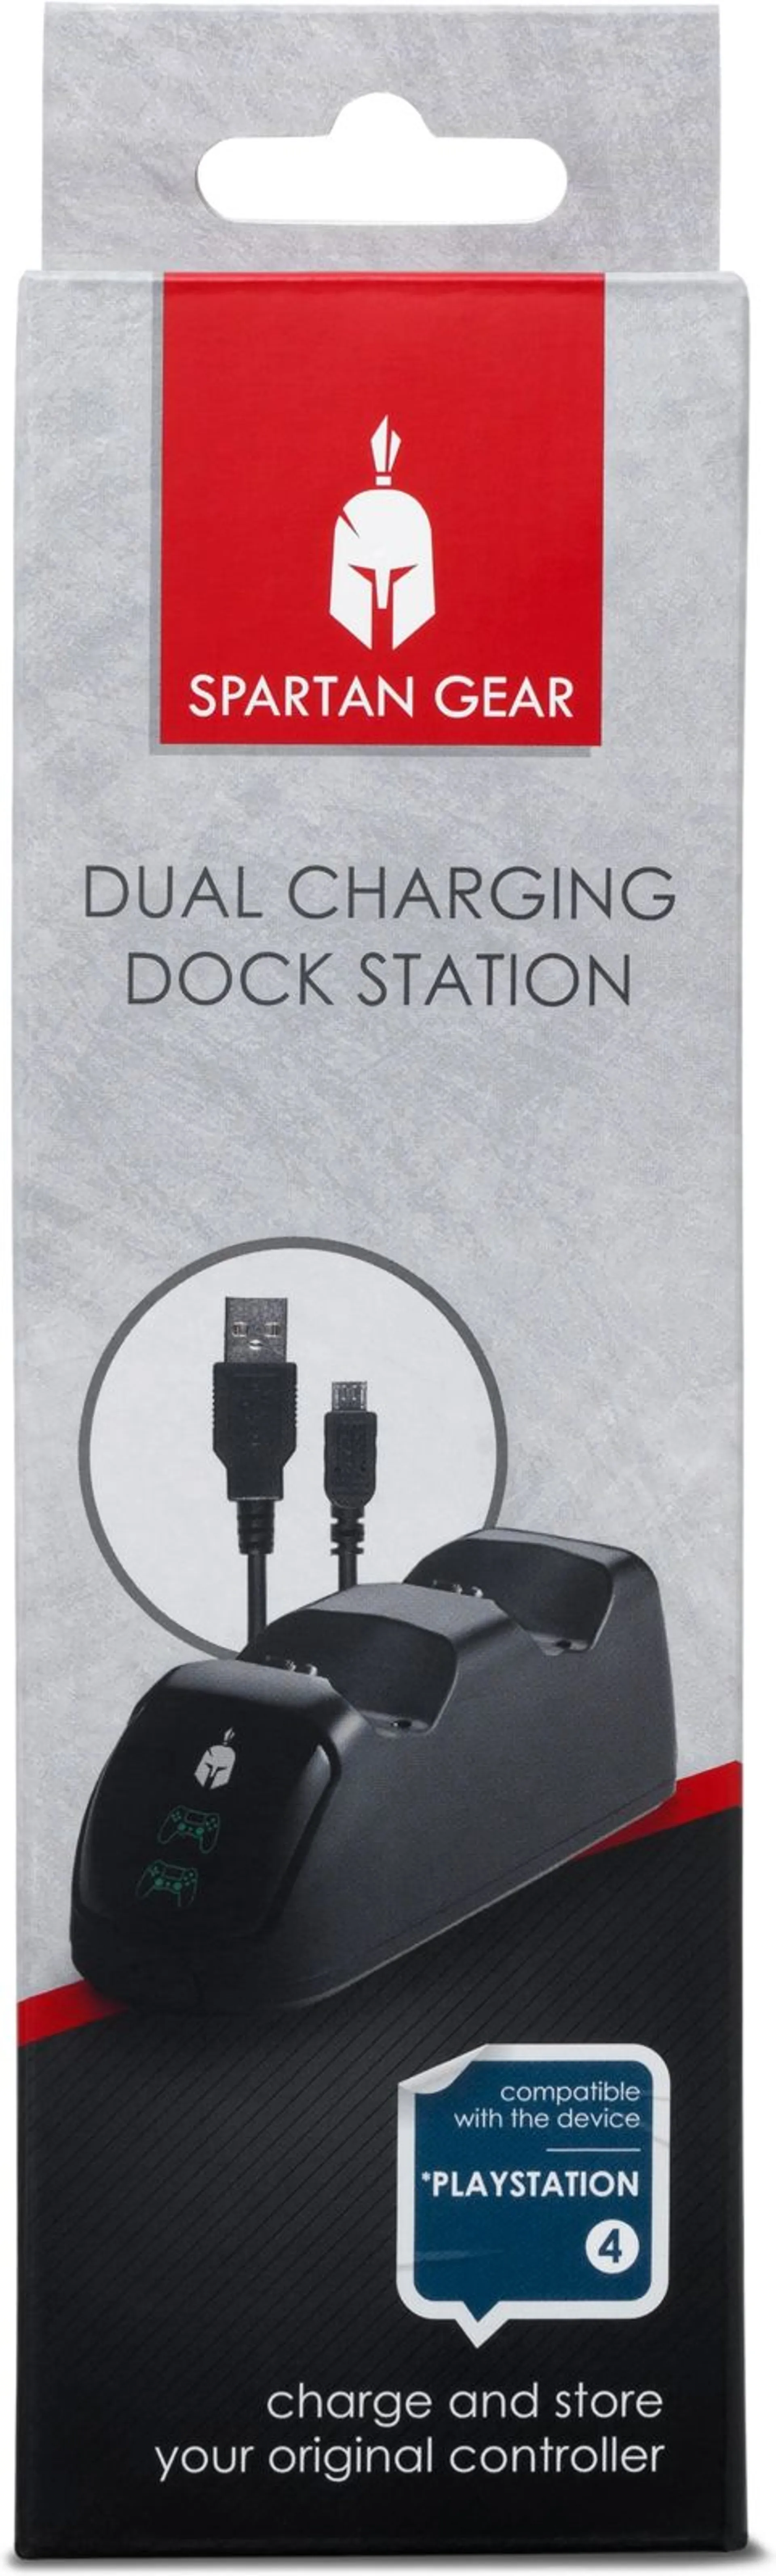 Spartan Gear Playstation 4 Latausasema Spartan Gear Duo Charging Dock Station - 2